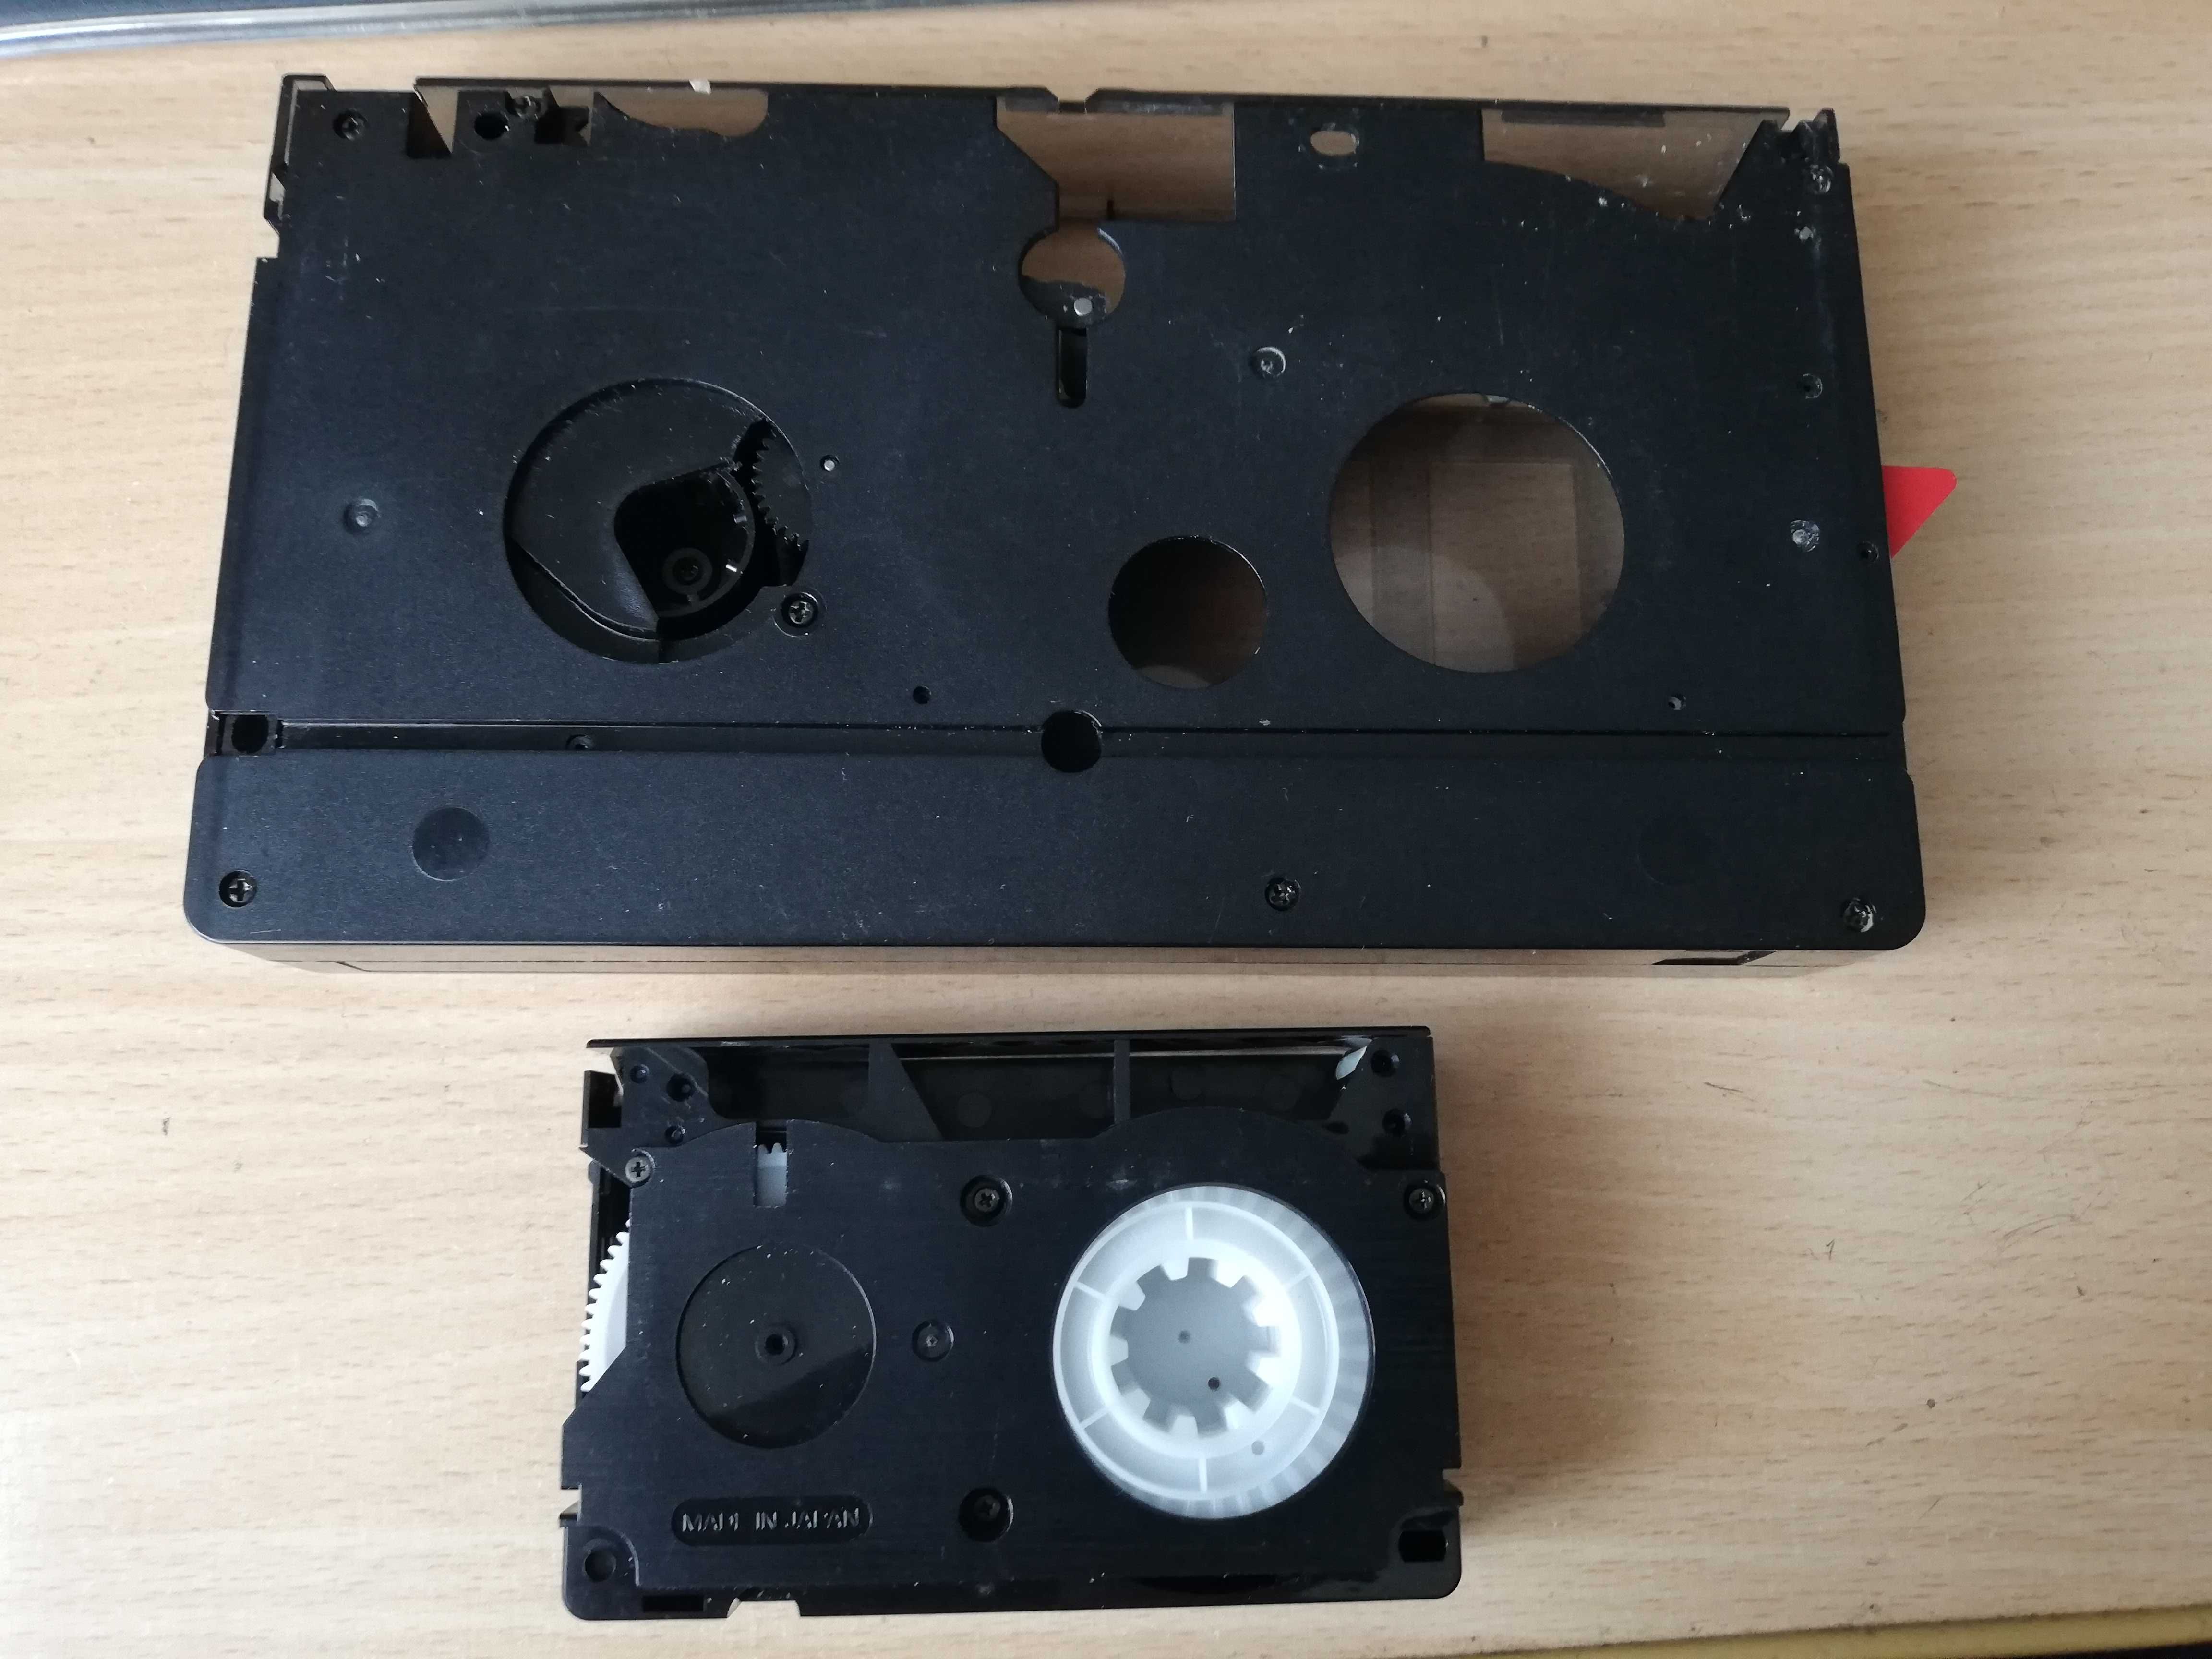 Kaseta   matka VHS-C Universum  model KA-C900  16 mm